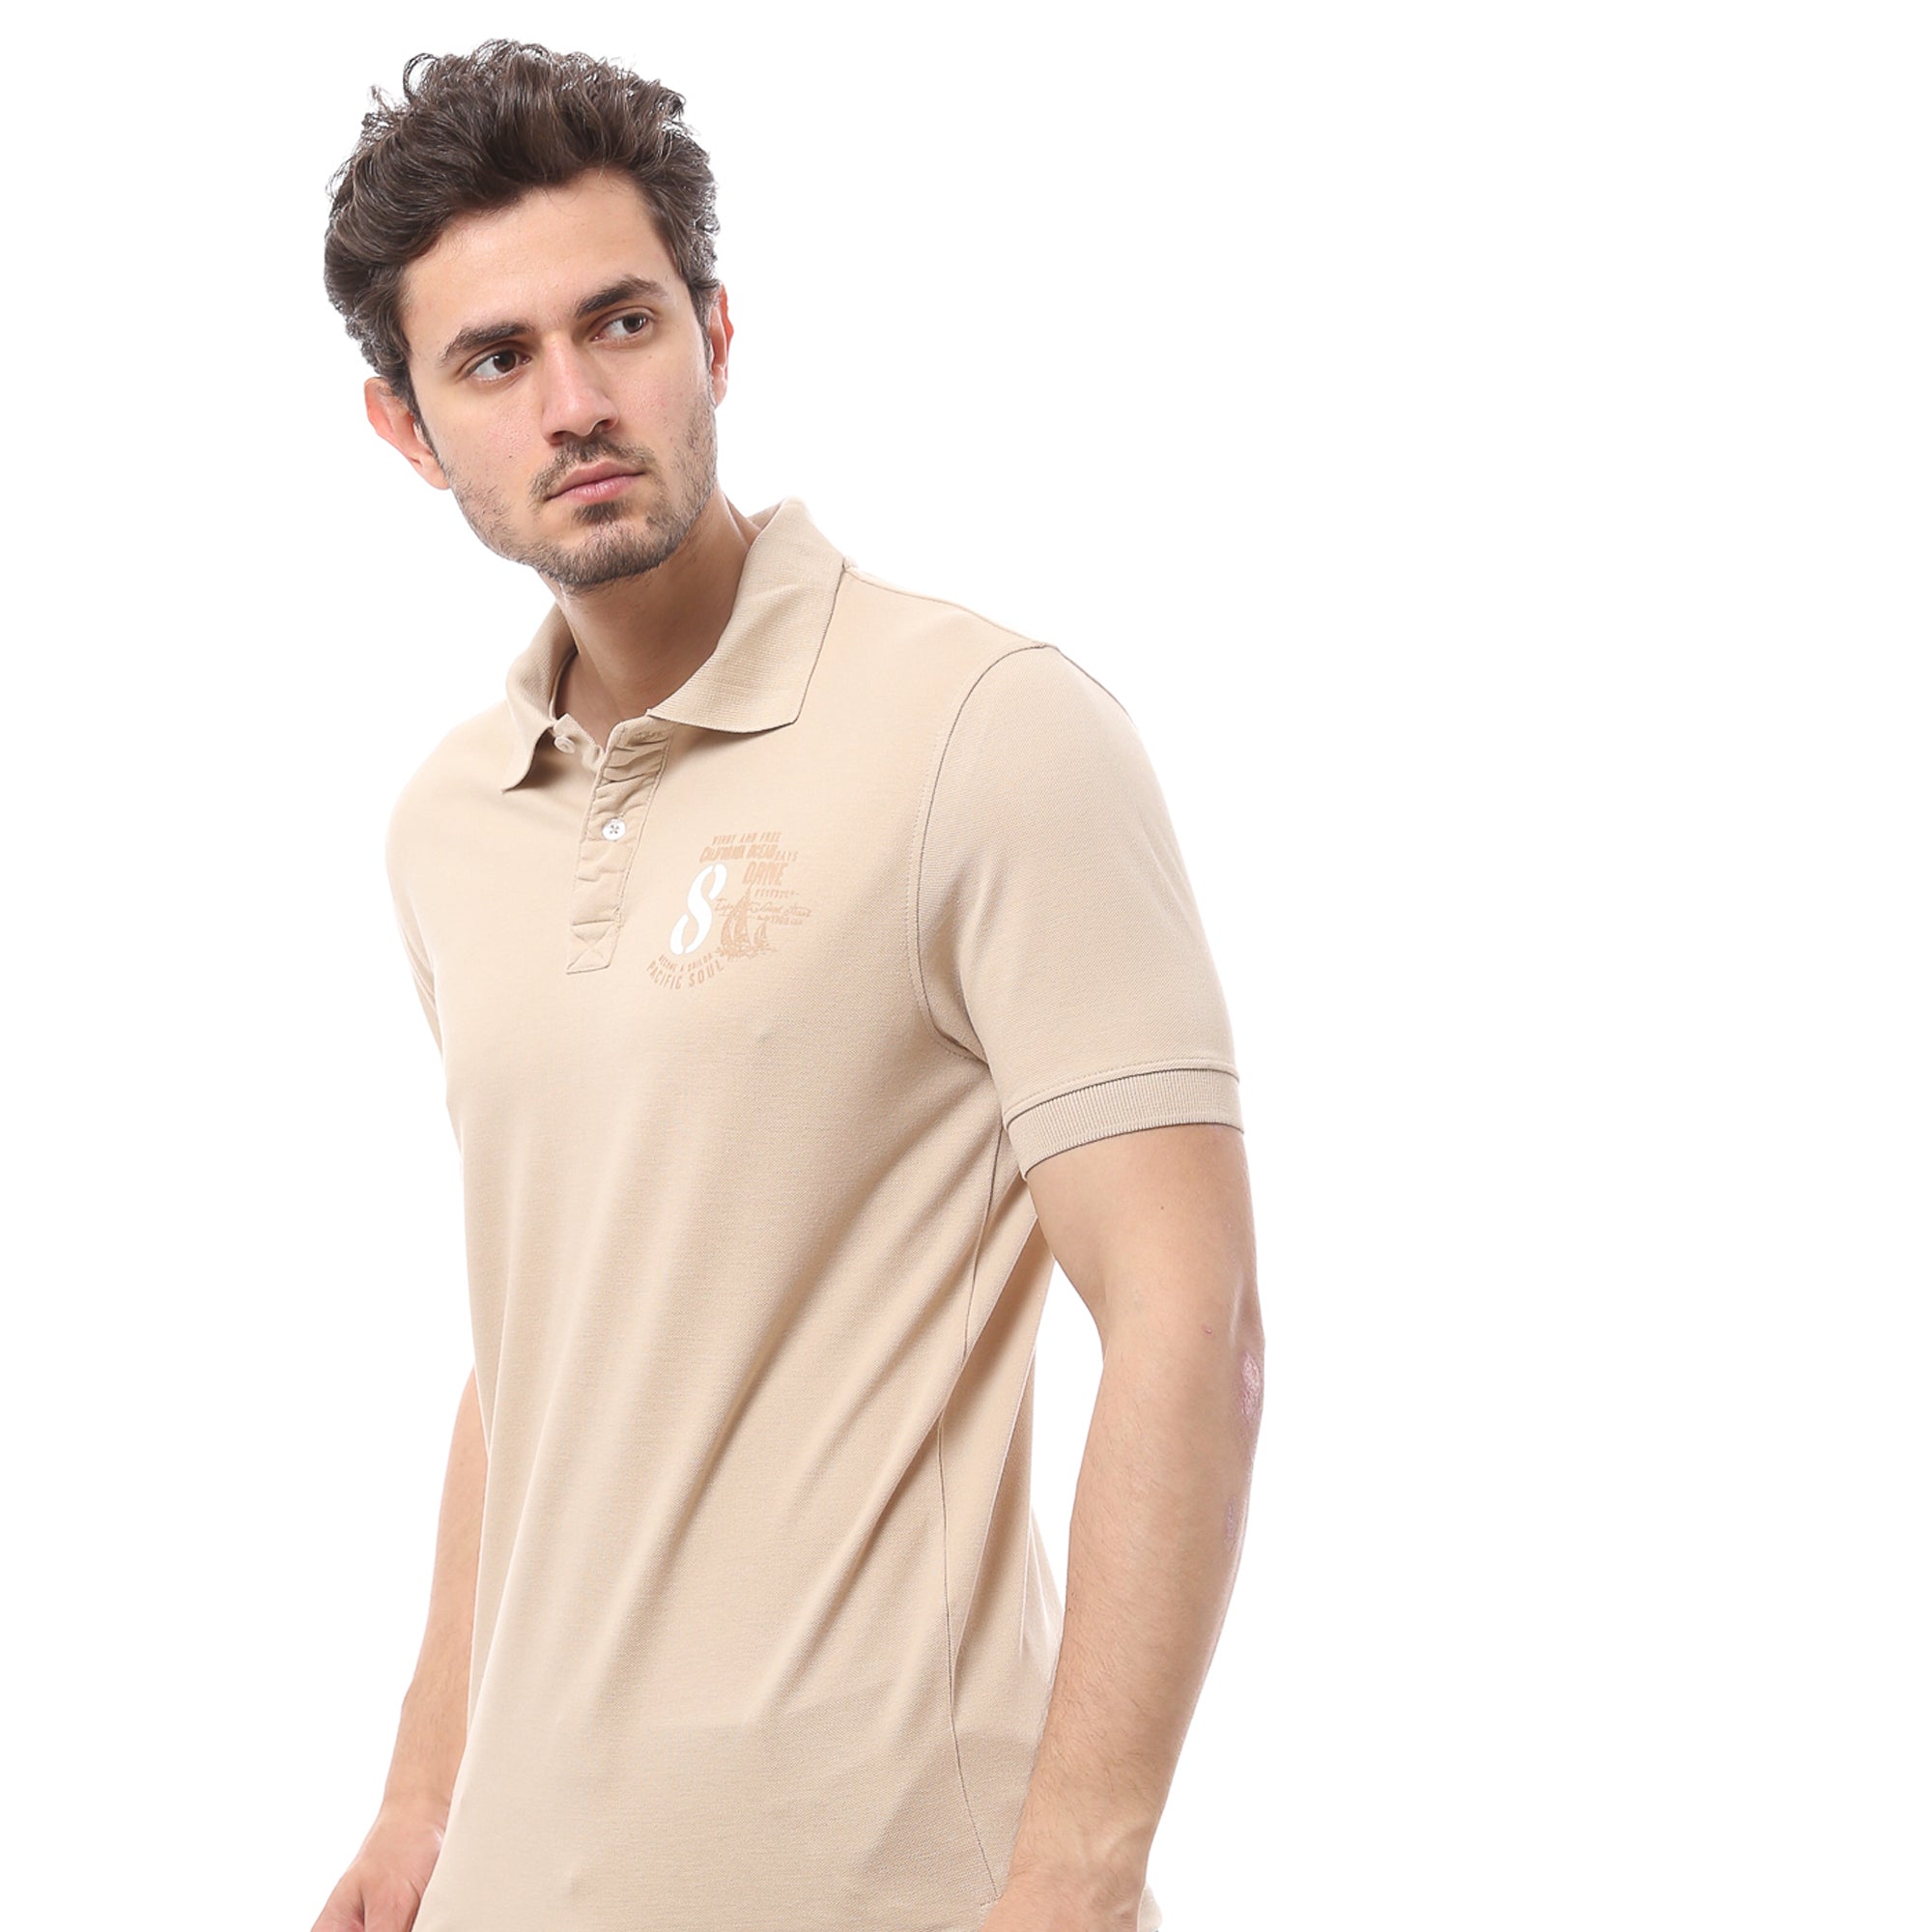 Classic Cotton Polo T-Shirt for Men -BEIGE